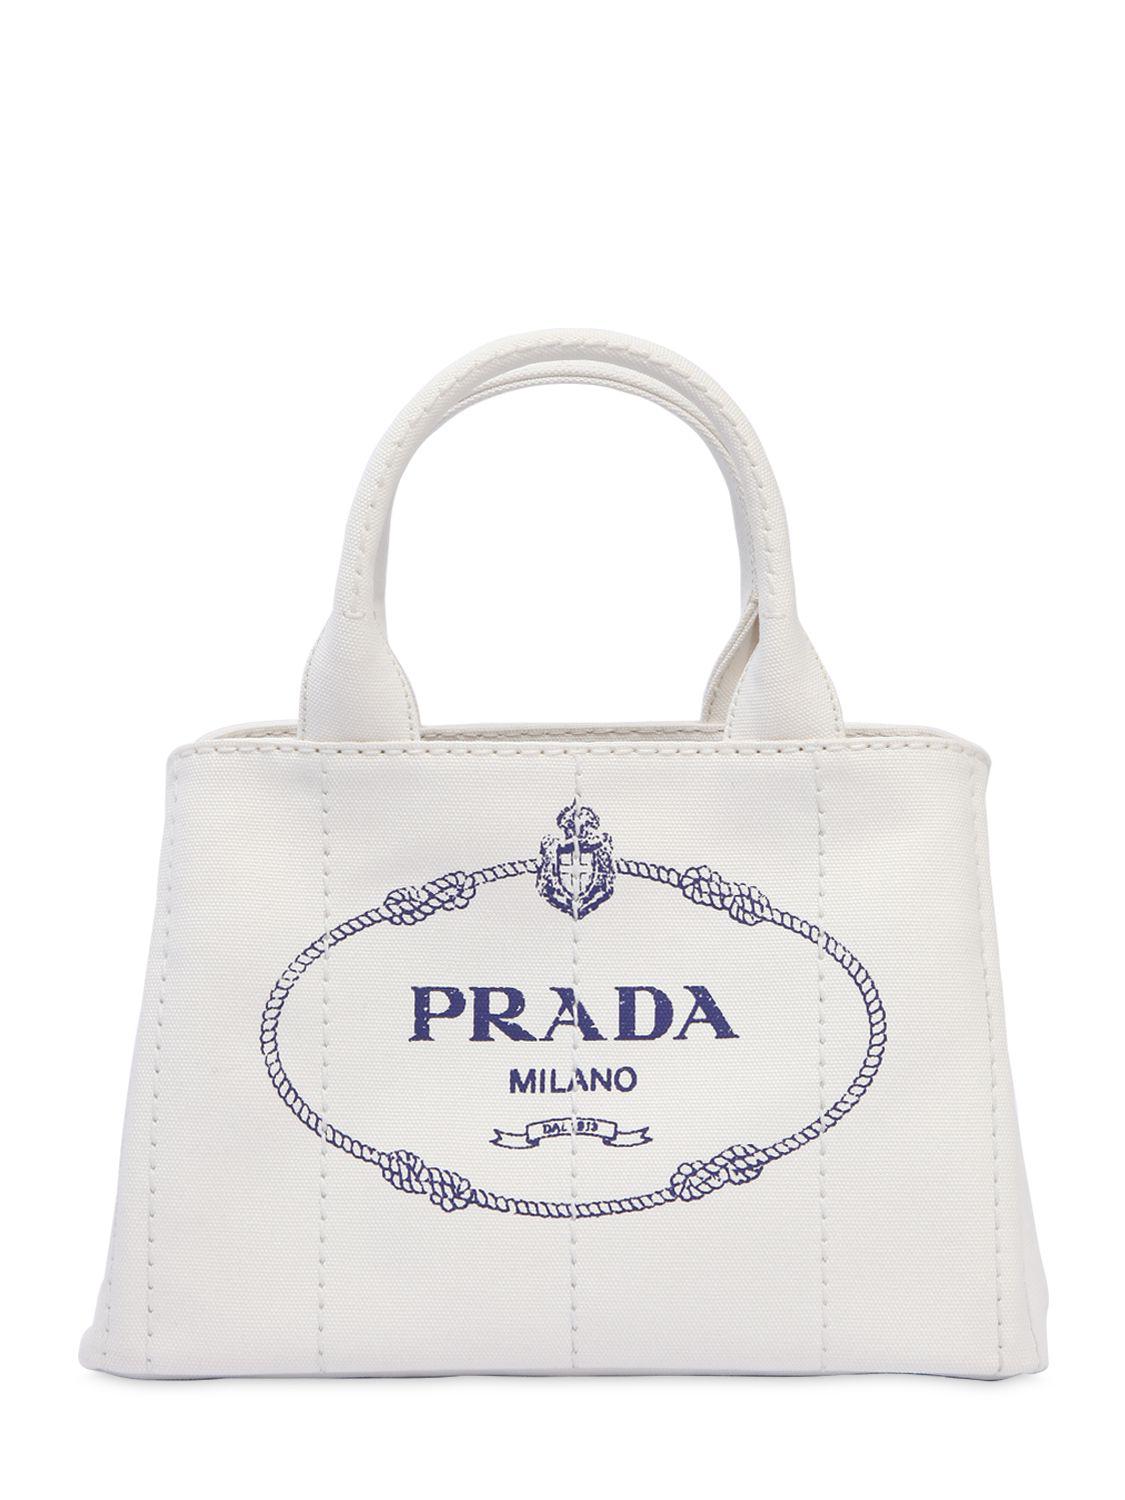 Prada Small Gardener's Cotton Canvas Bag in White